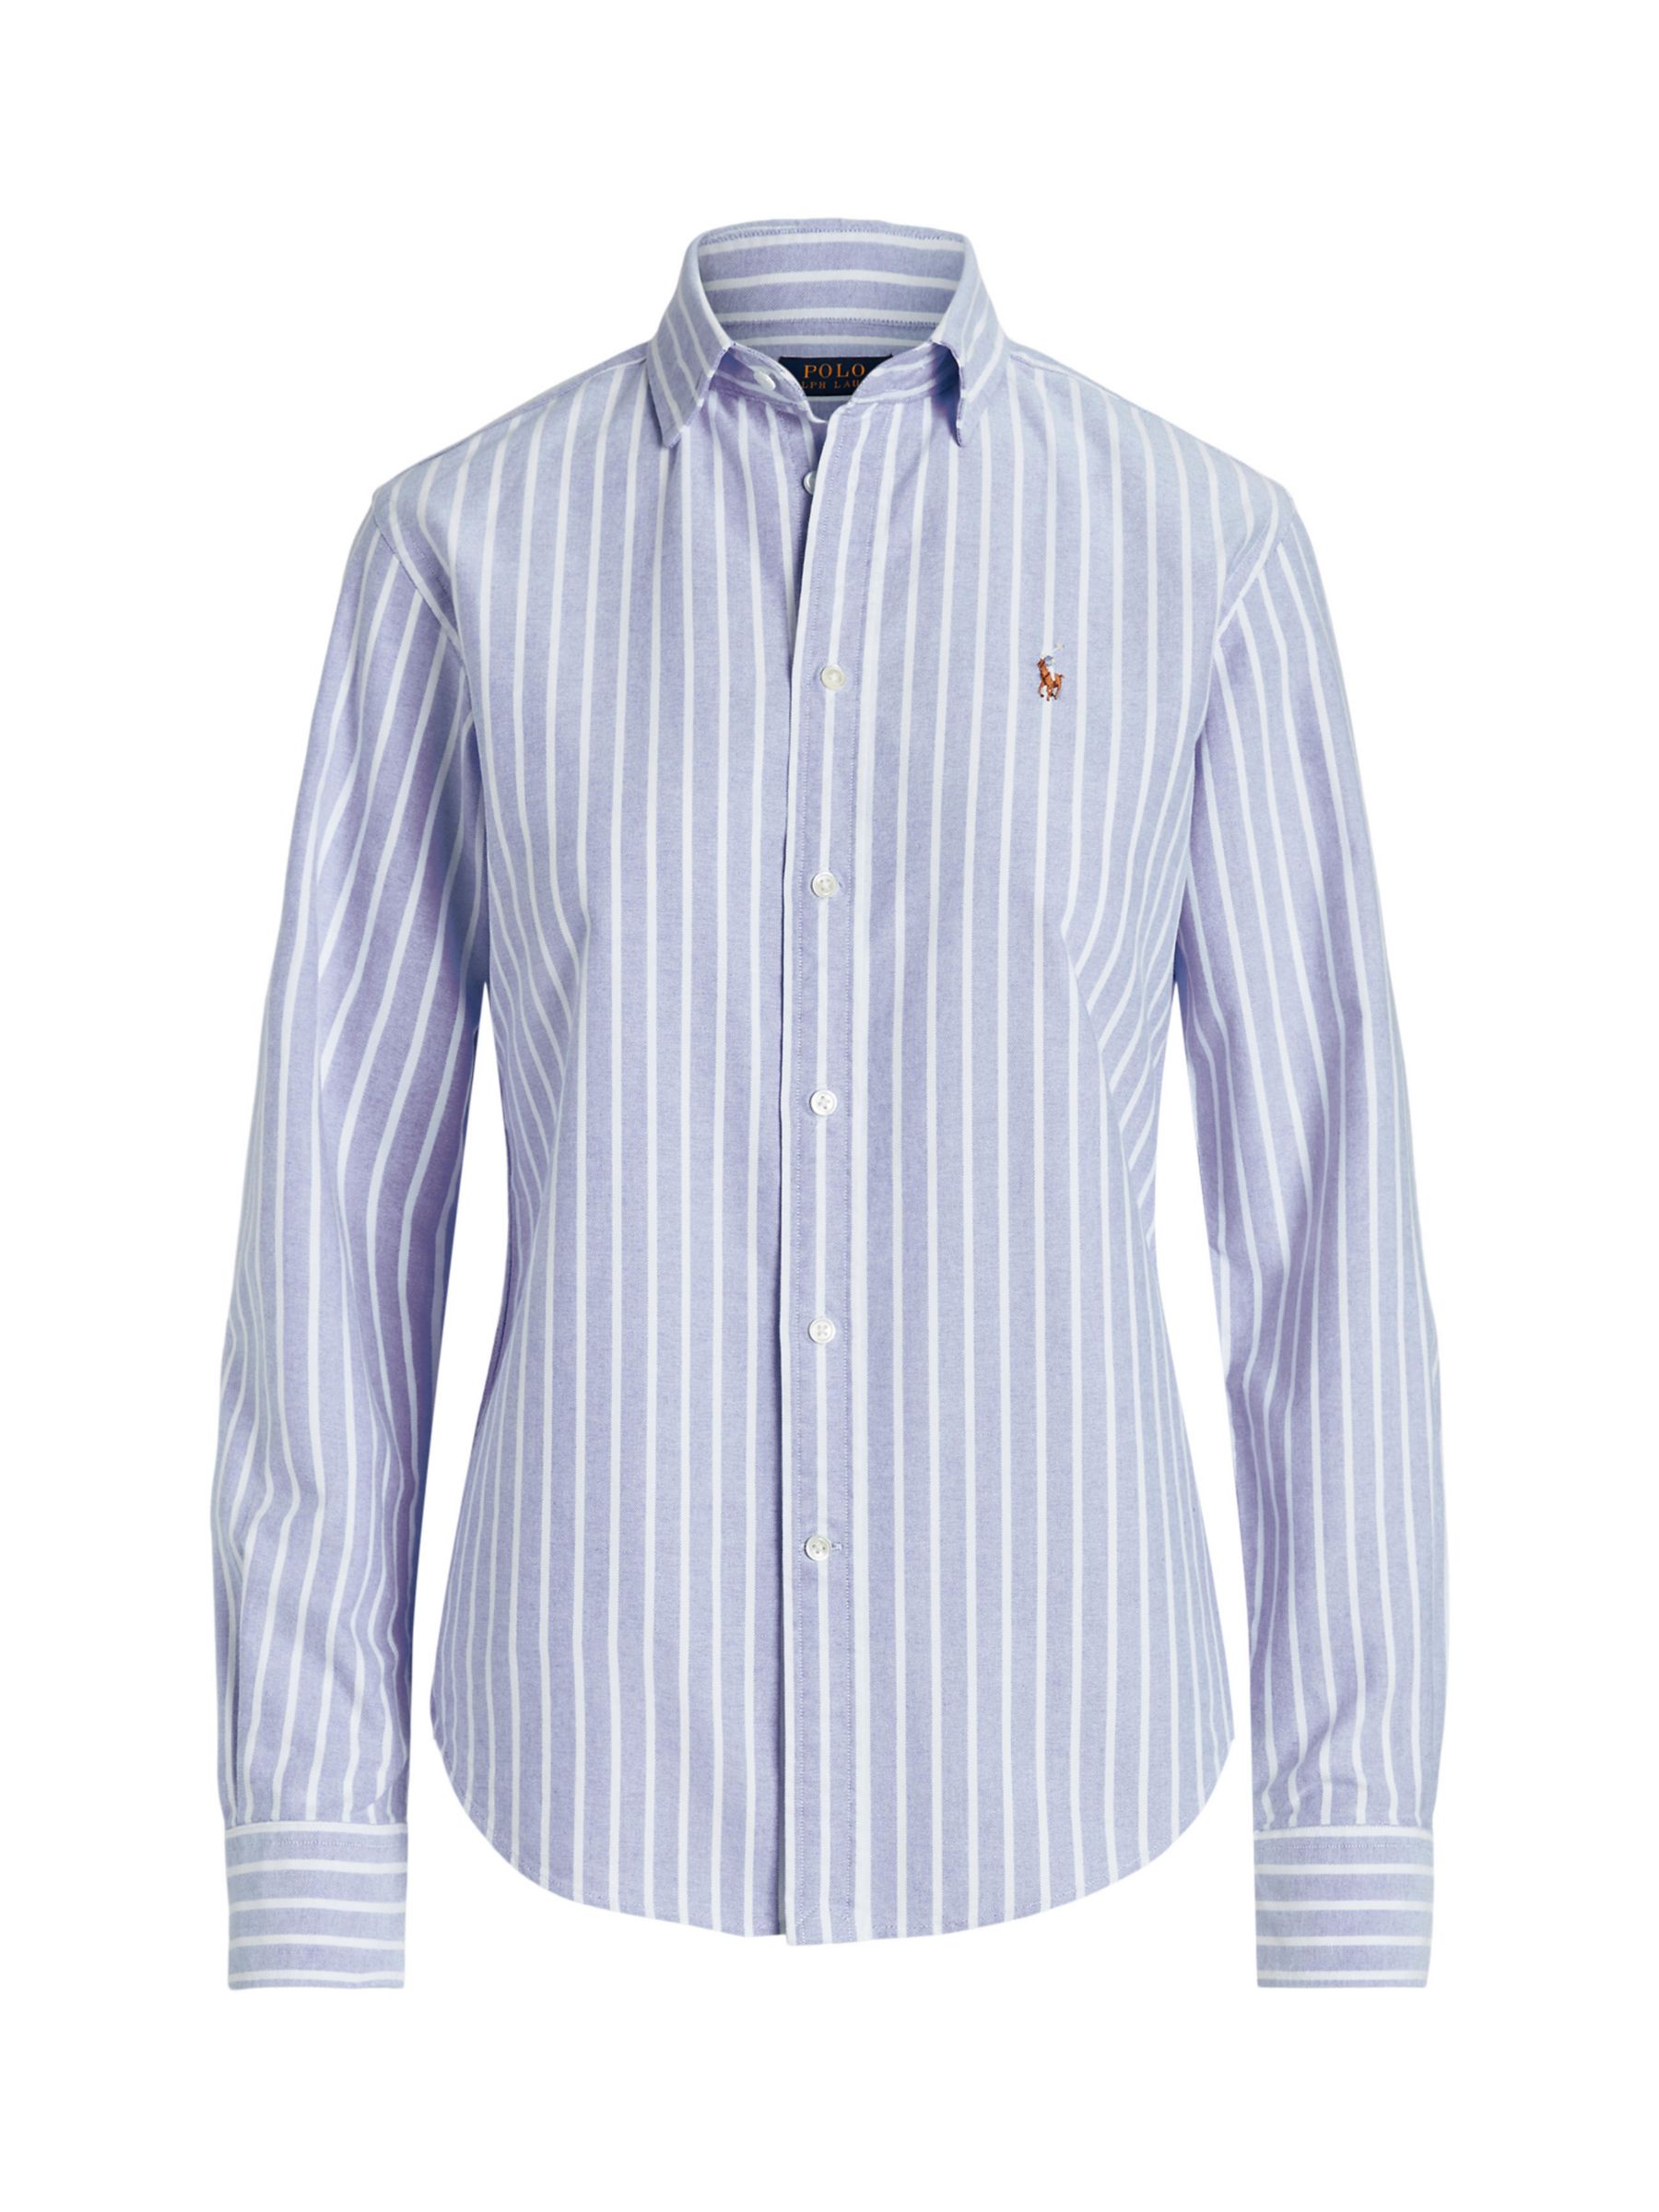 Polo Ralph Lauren Striped Cotton Shirt, Island Blue/White at John Lewis ...